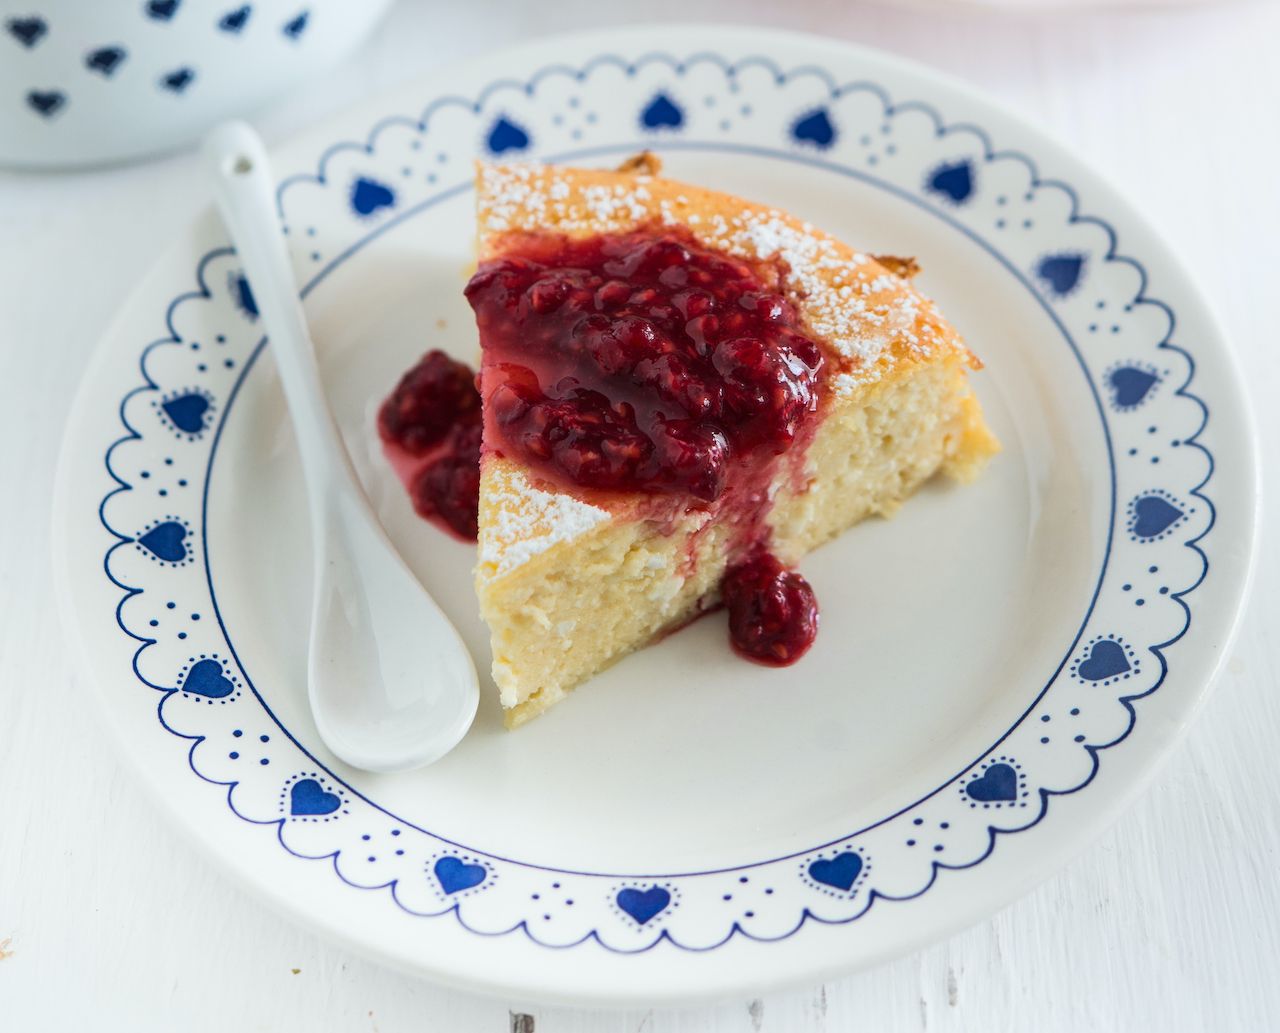 Cheesecake estilo Sueco con mermelada